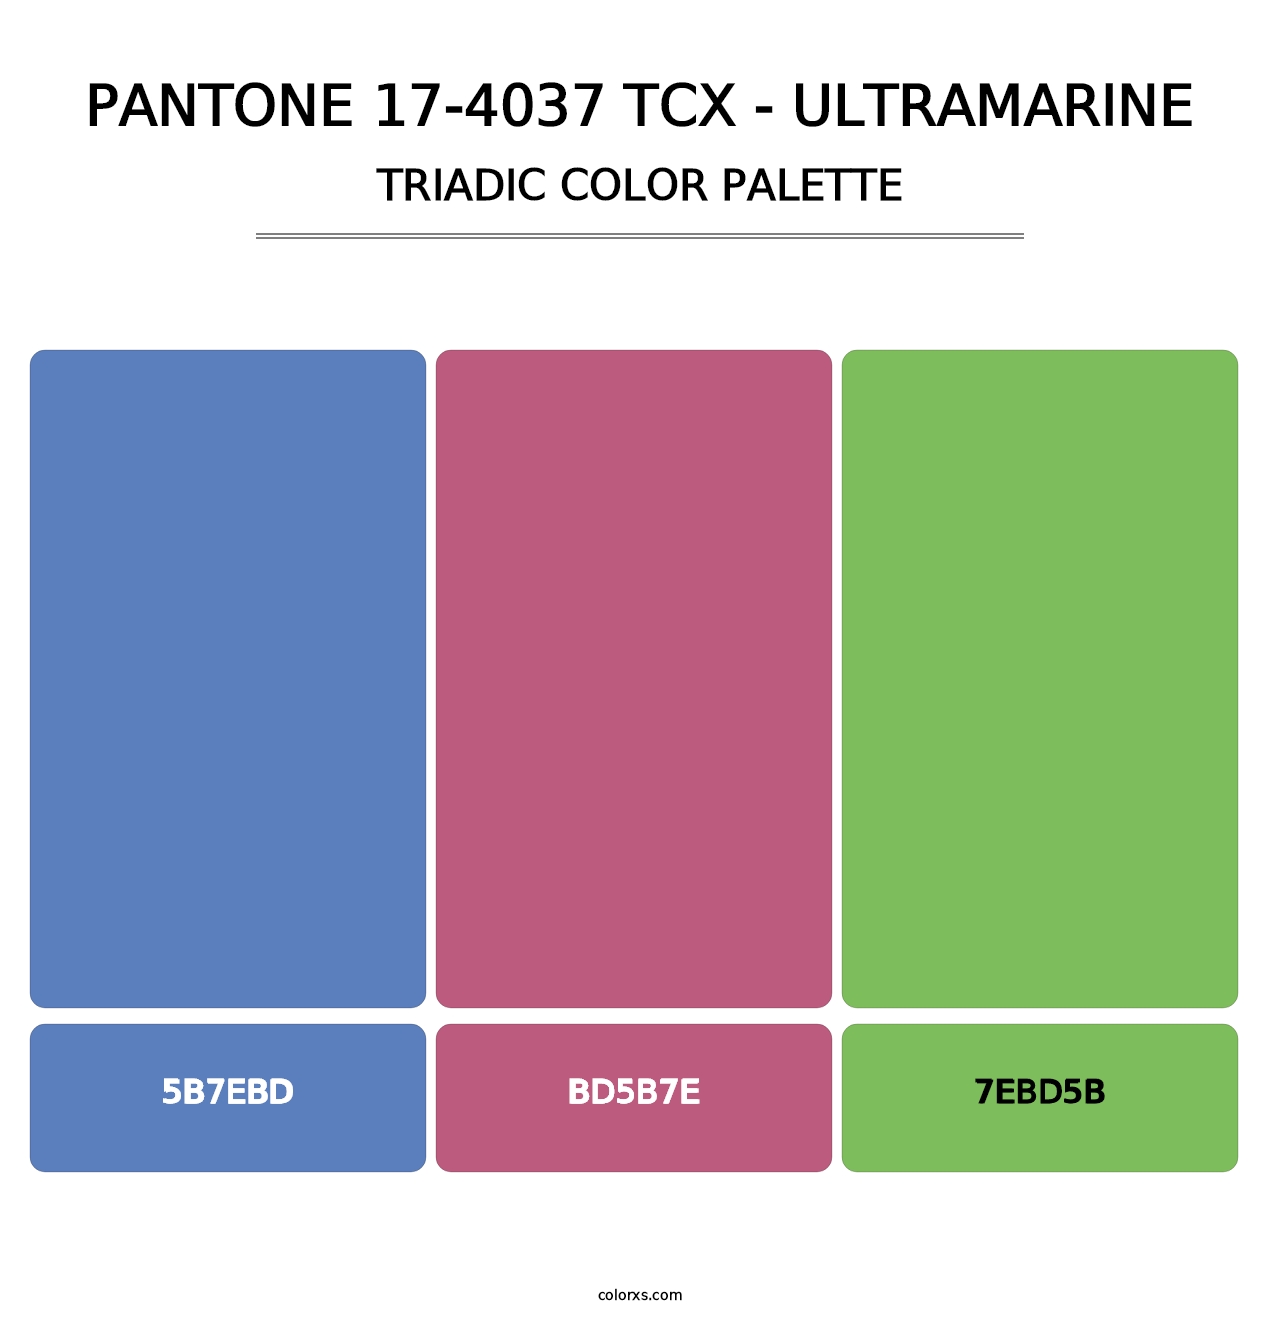 PANTONE 17-4037 TCX - Ultramarine - Triadic Color Palette